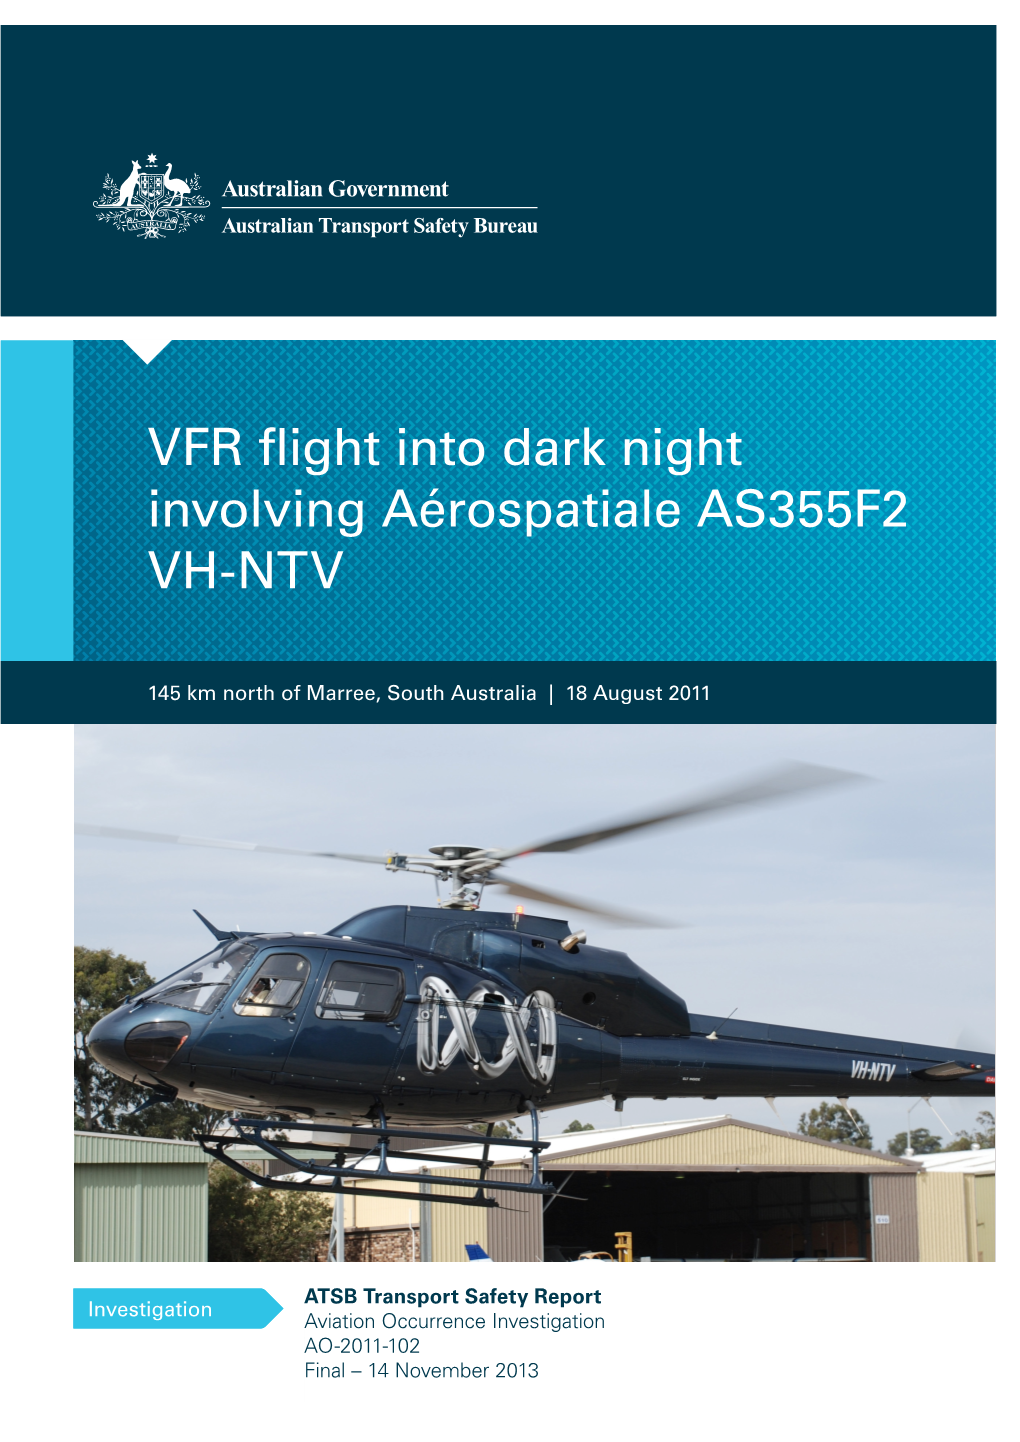 VFR Flight Into Dark Night Conditions Involving Aérospatiale AS355F2